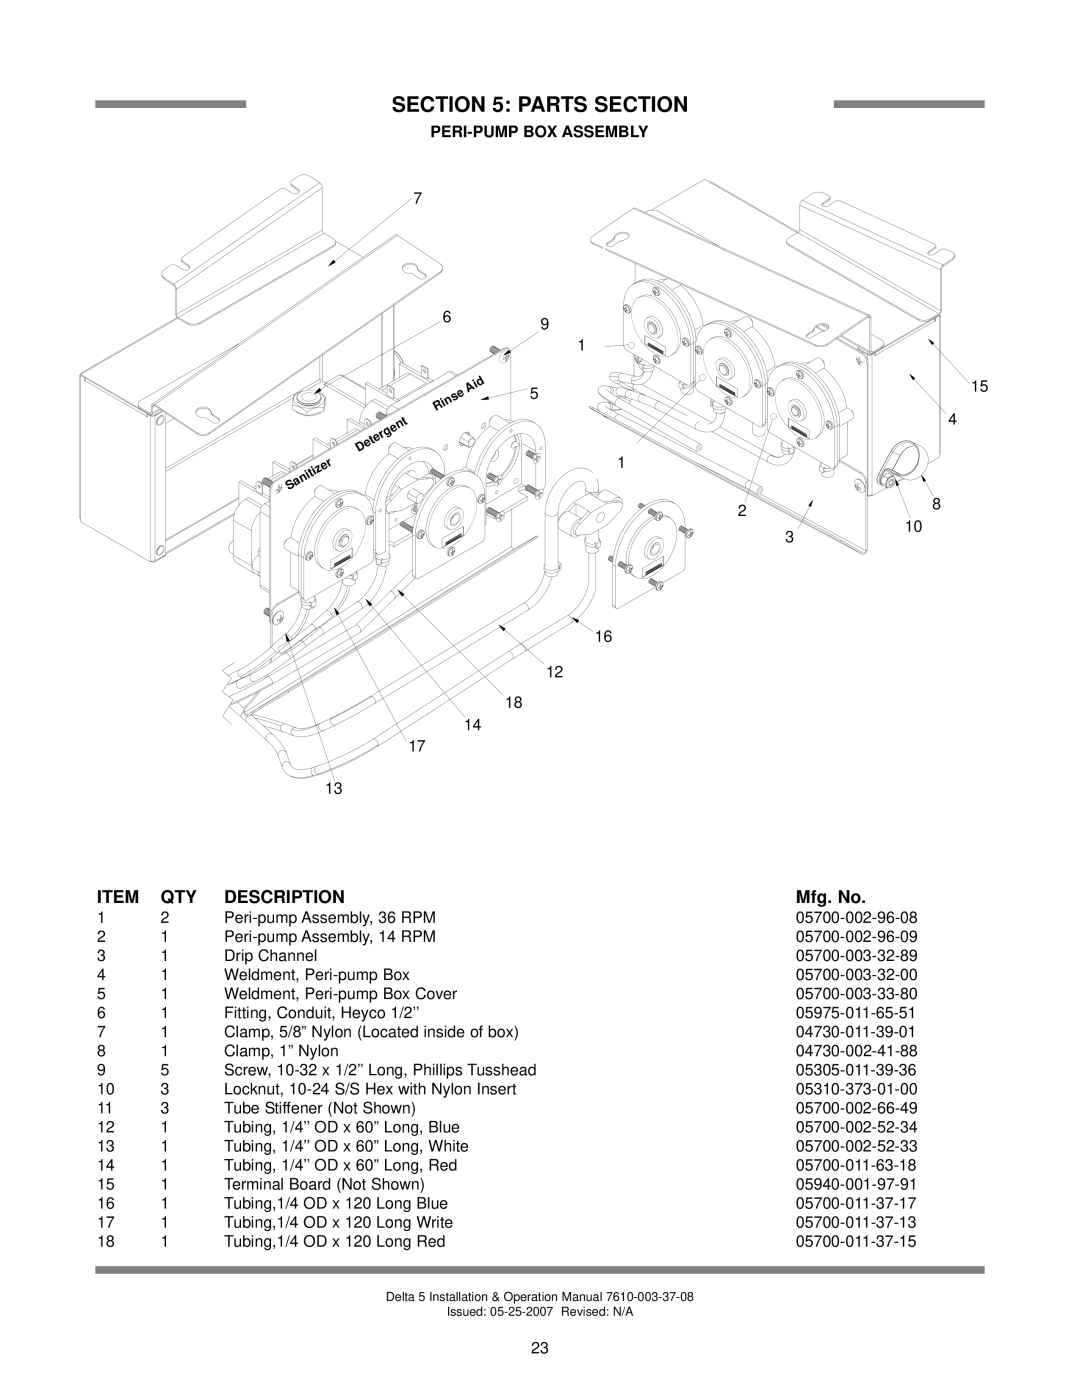 Jackson DELTA 5 D Peri-Pump Box Assembly, Parts Section, Description, Mfg. No, Delta 5 Installation & Operation Manual 